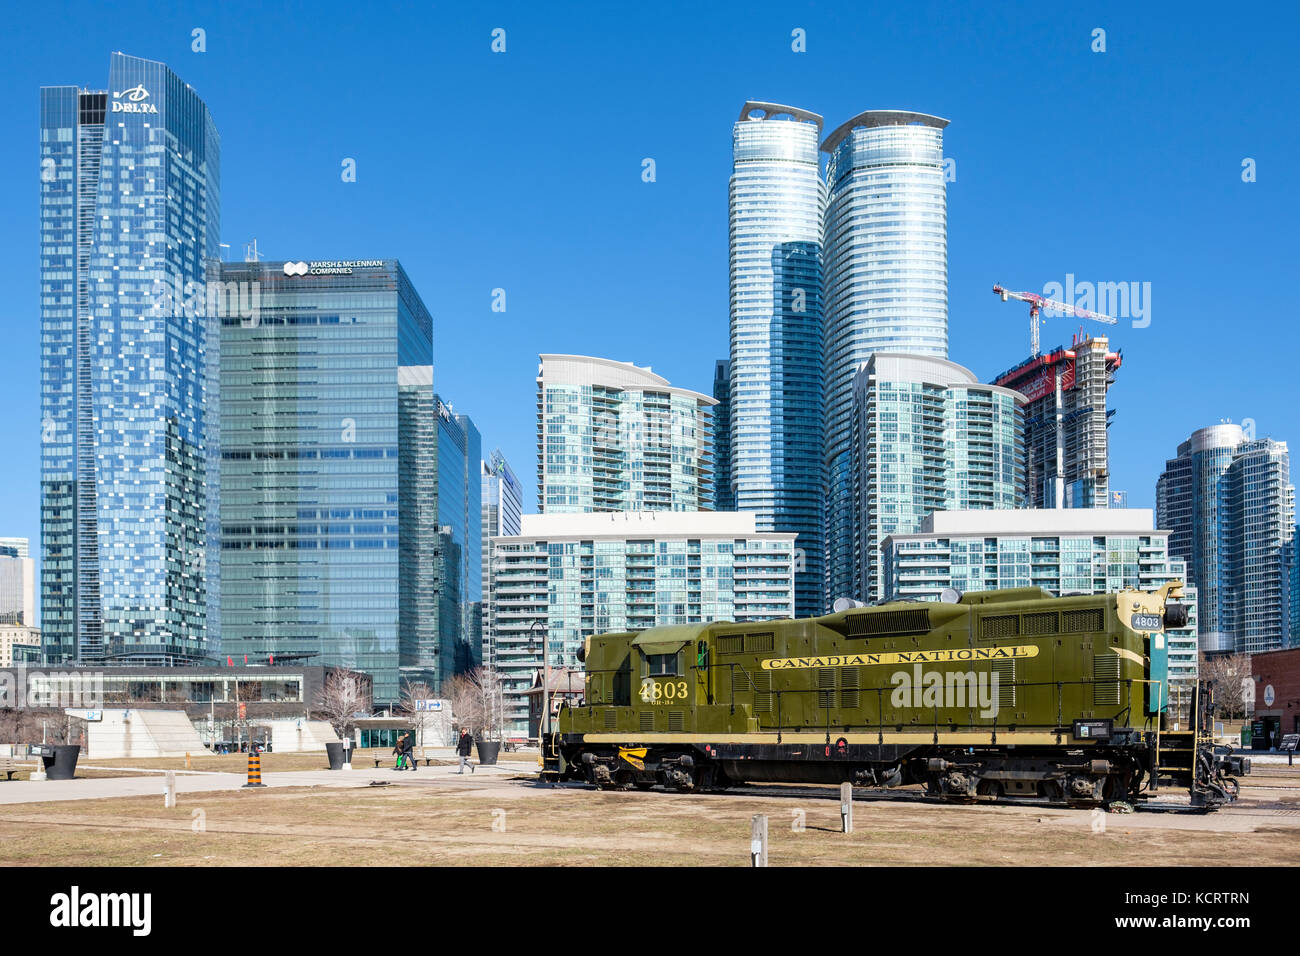 Toronto Railway Museum, Roundhouse Park, 4803 Canadian National Railway green locomotive, modern buildings in background, Toronto, Ontario, Canada. Stock Photo